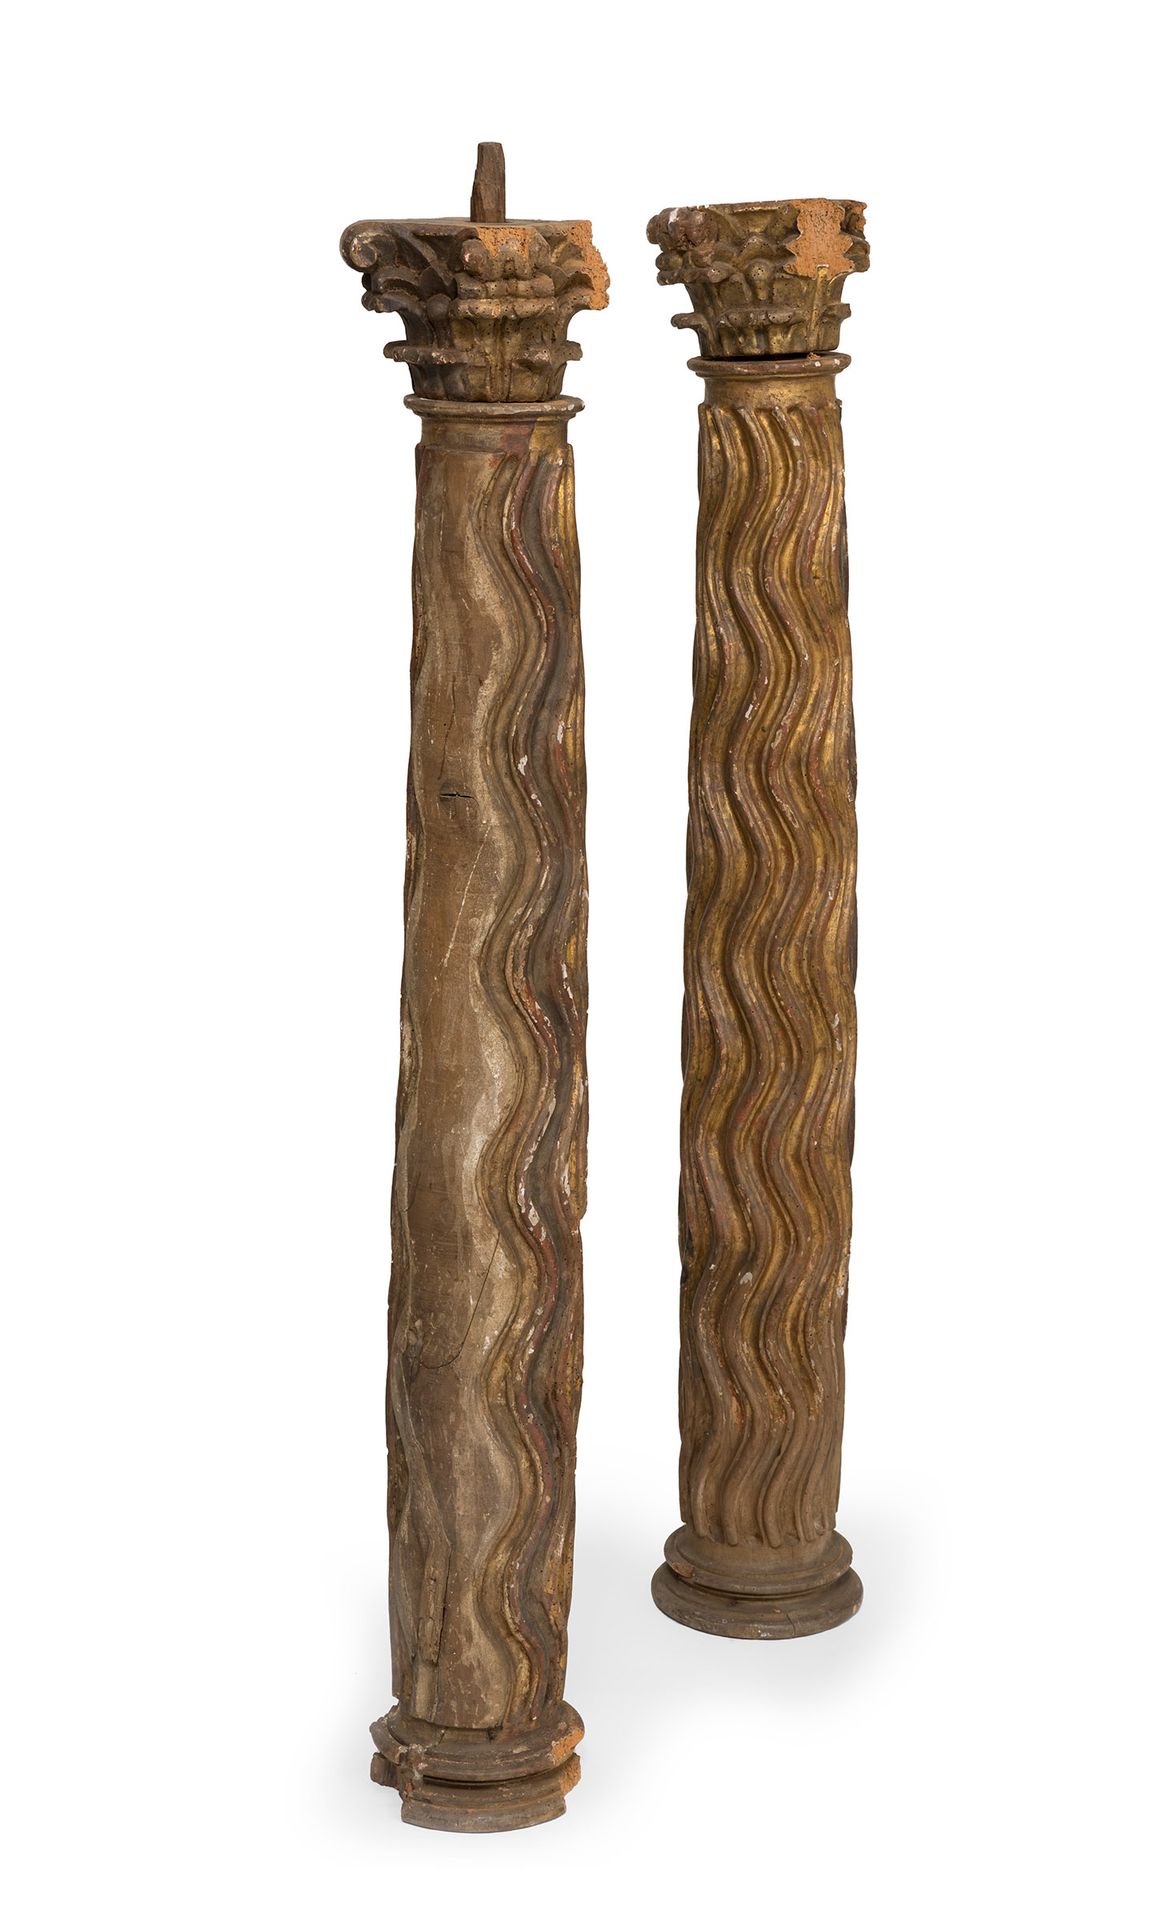 Null Säulenpaar. Spanien, 17. Jahrhundert.
Holz geschnitzt, Spuren von Vergoldun&hellip;